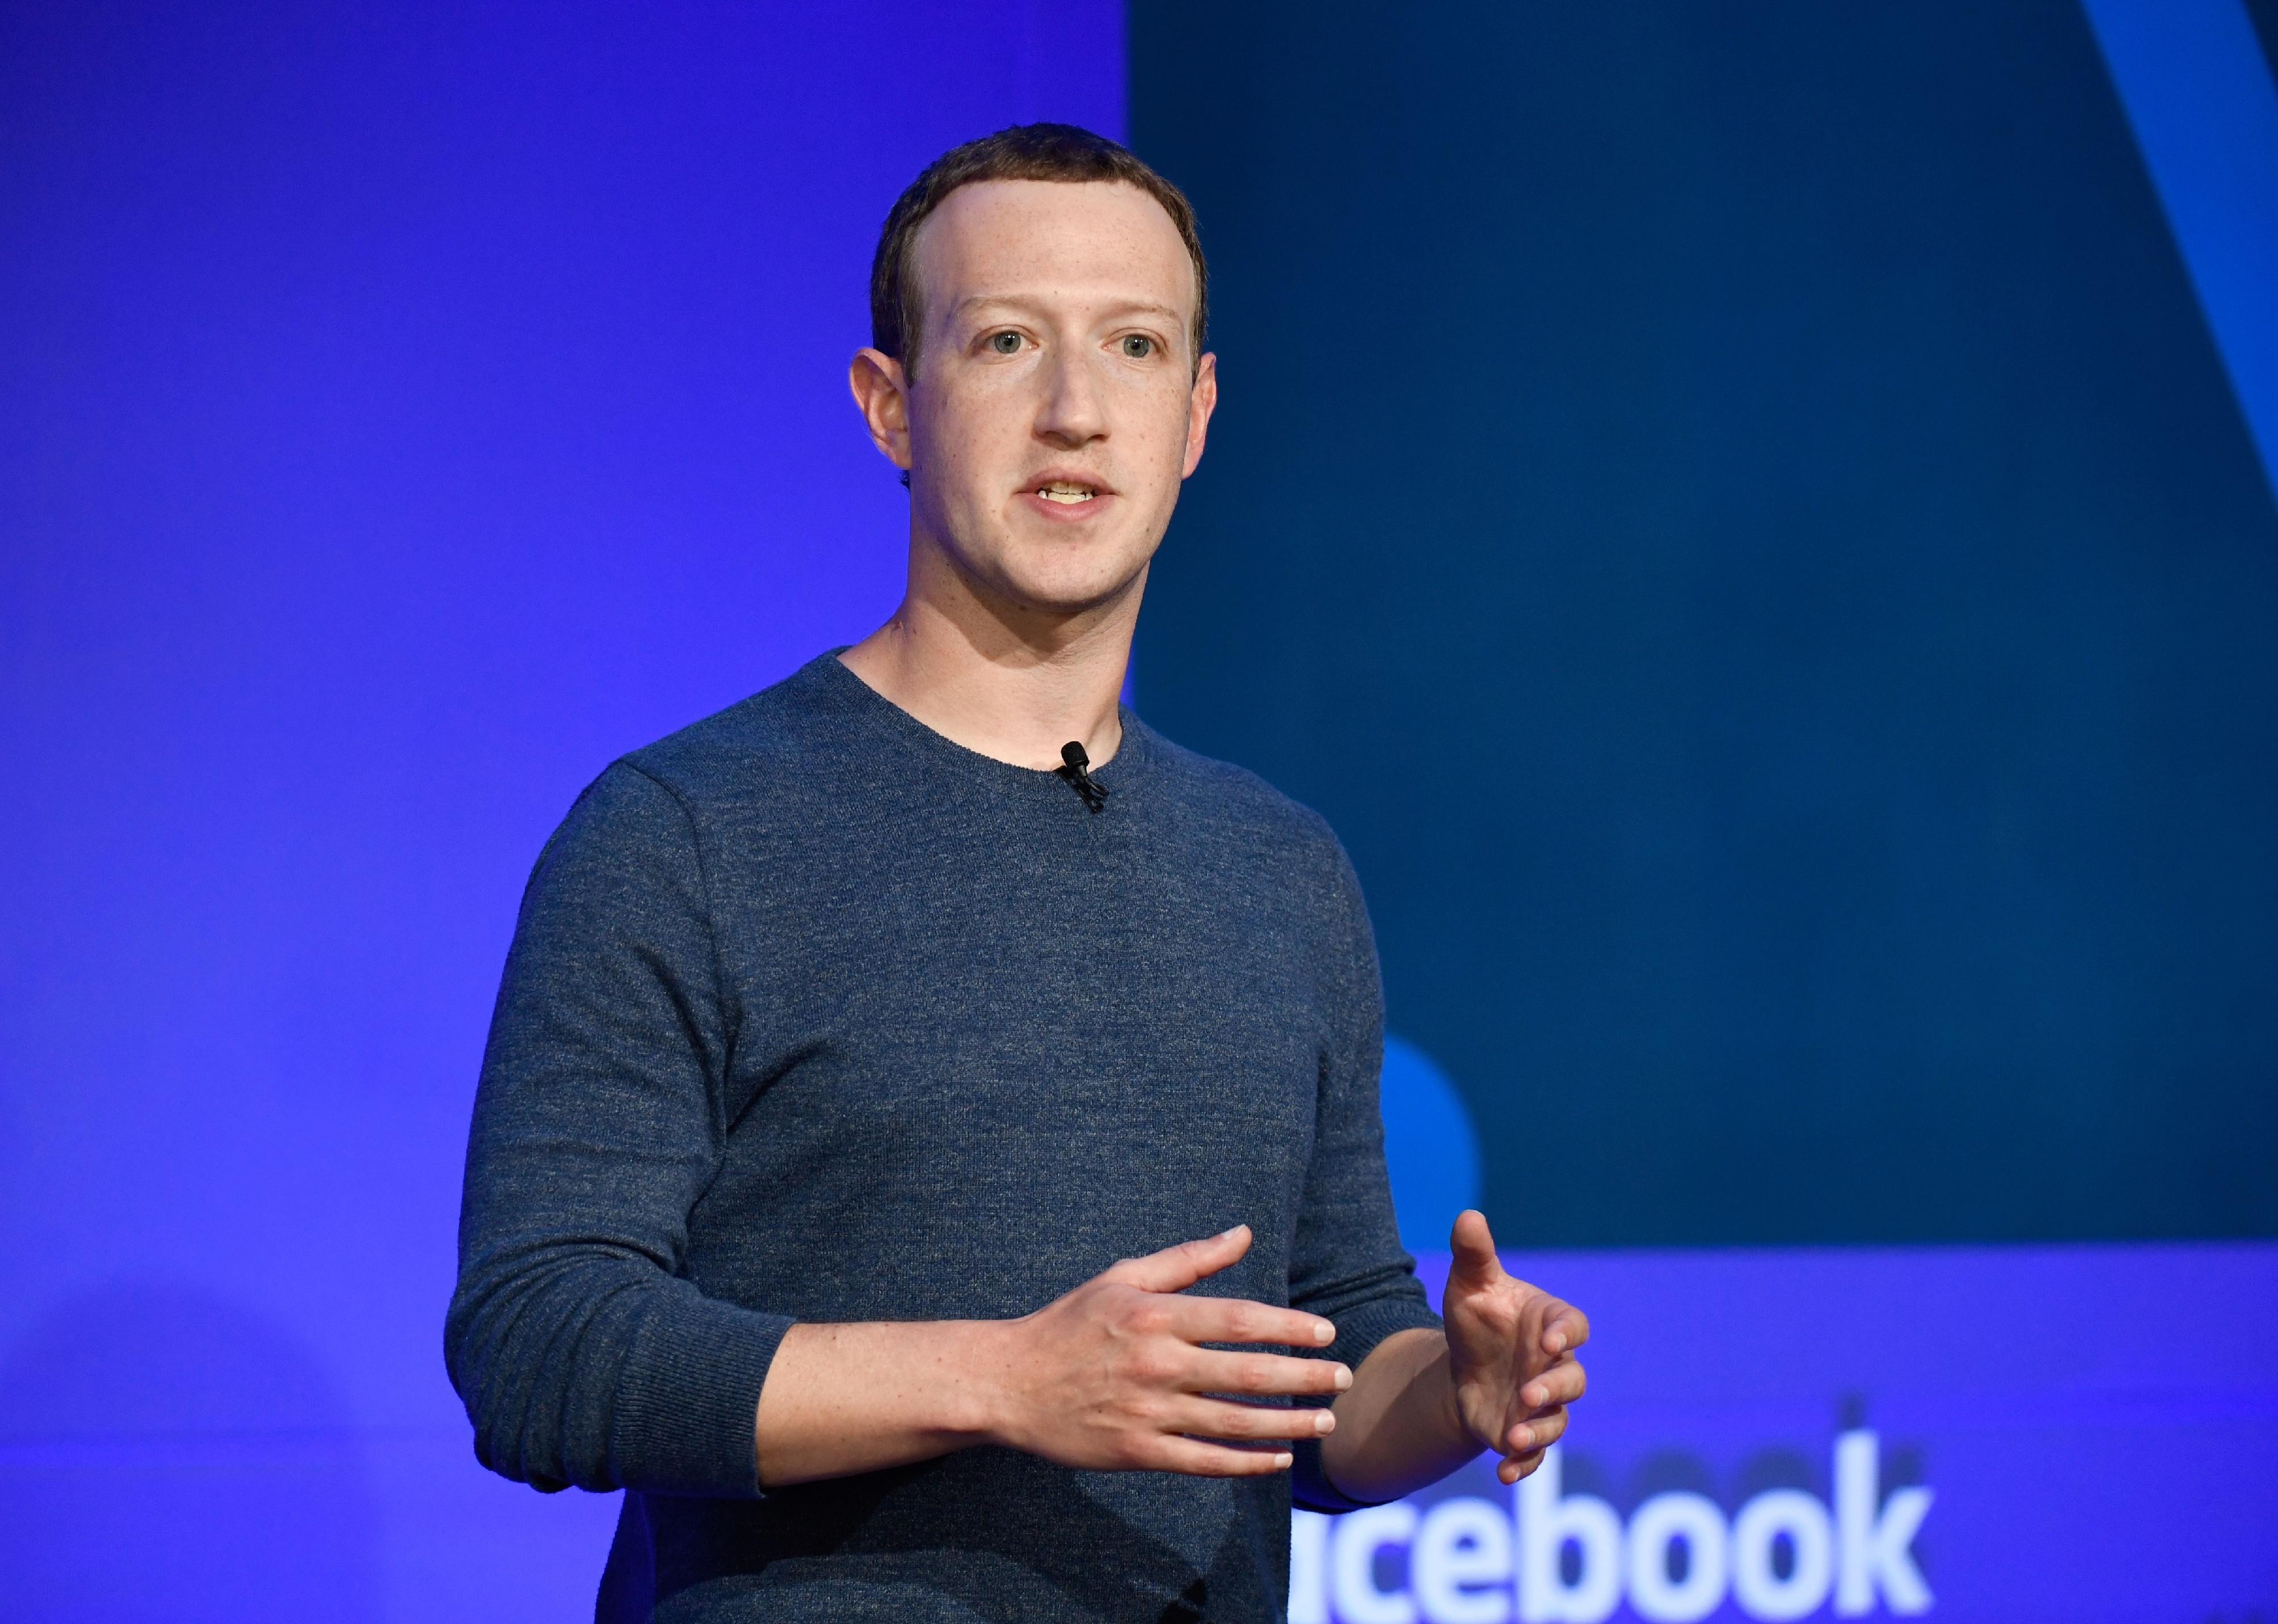 Mark Zuckerberg speaks at Facebook event.